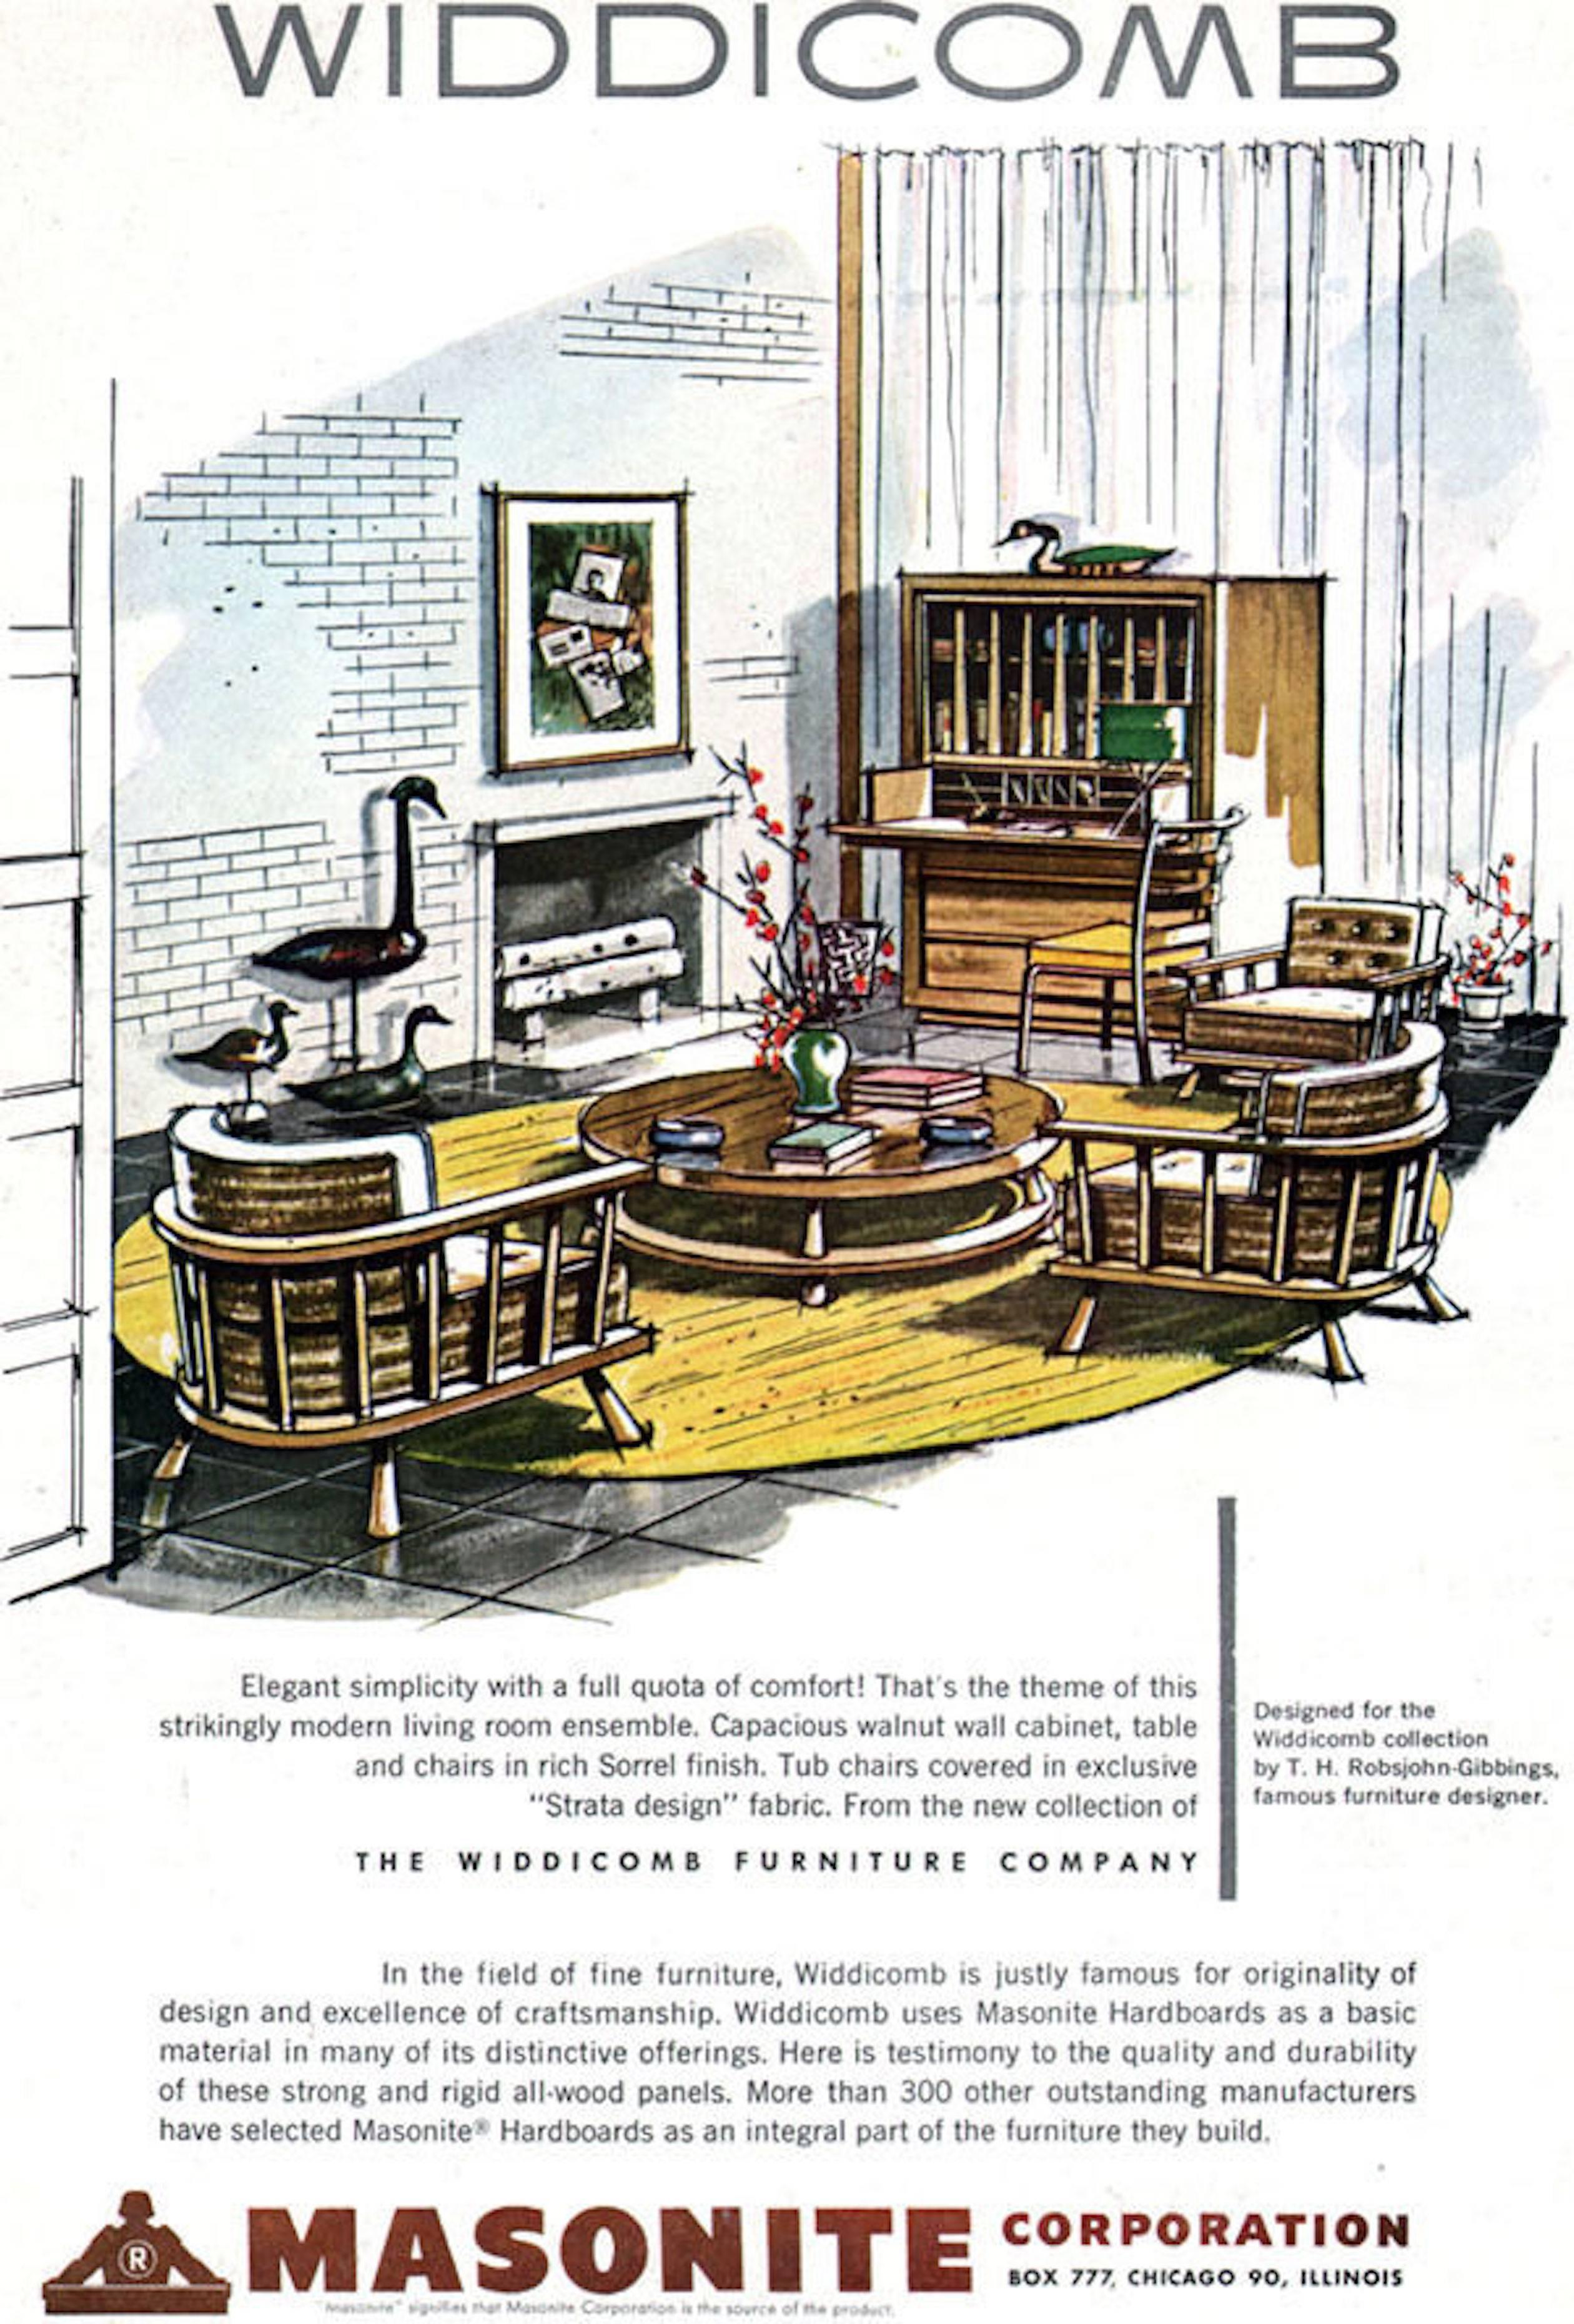 Rare Ebonized Two-Drawer Cocktail Table by T.H. Robsjohn-Gibbings 2